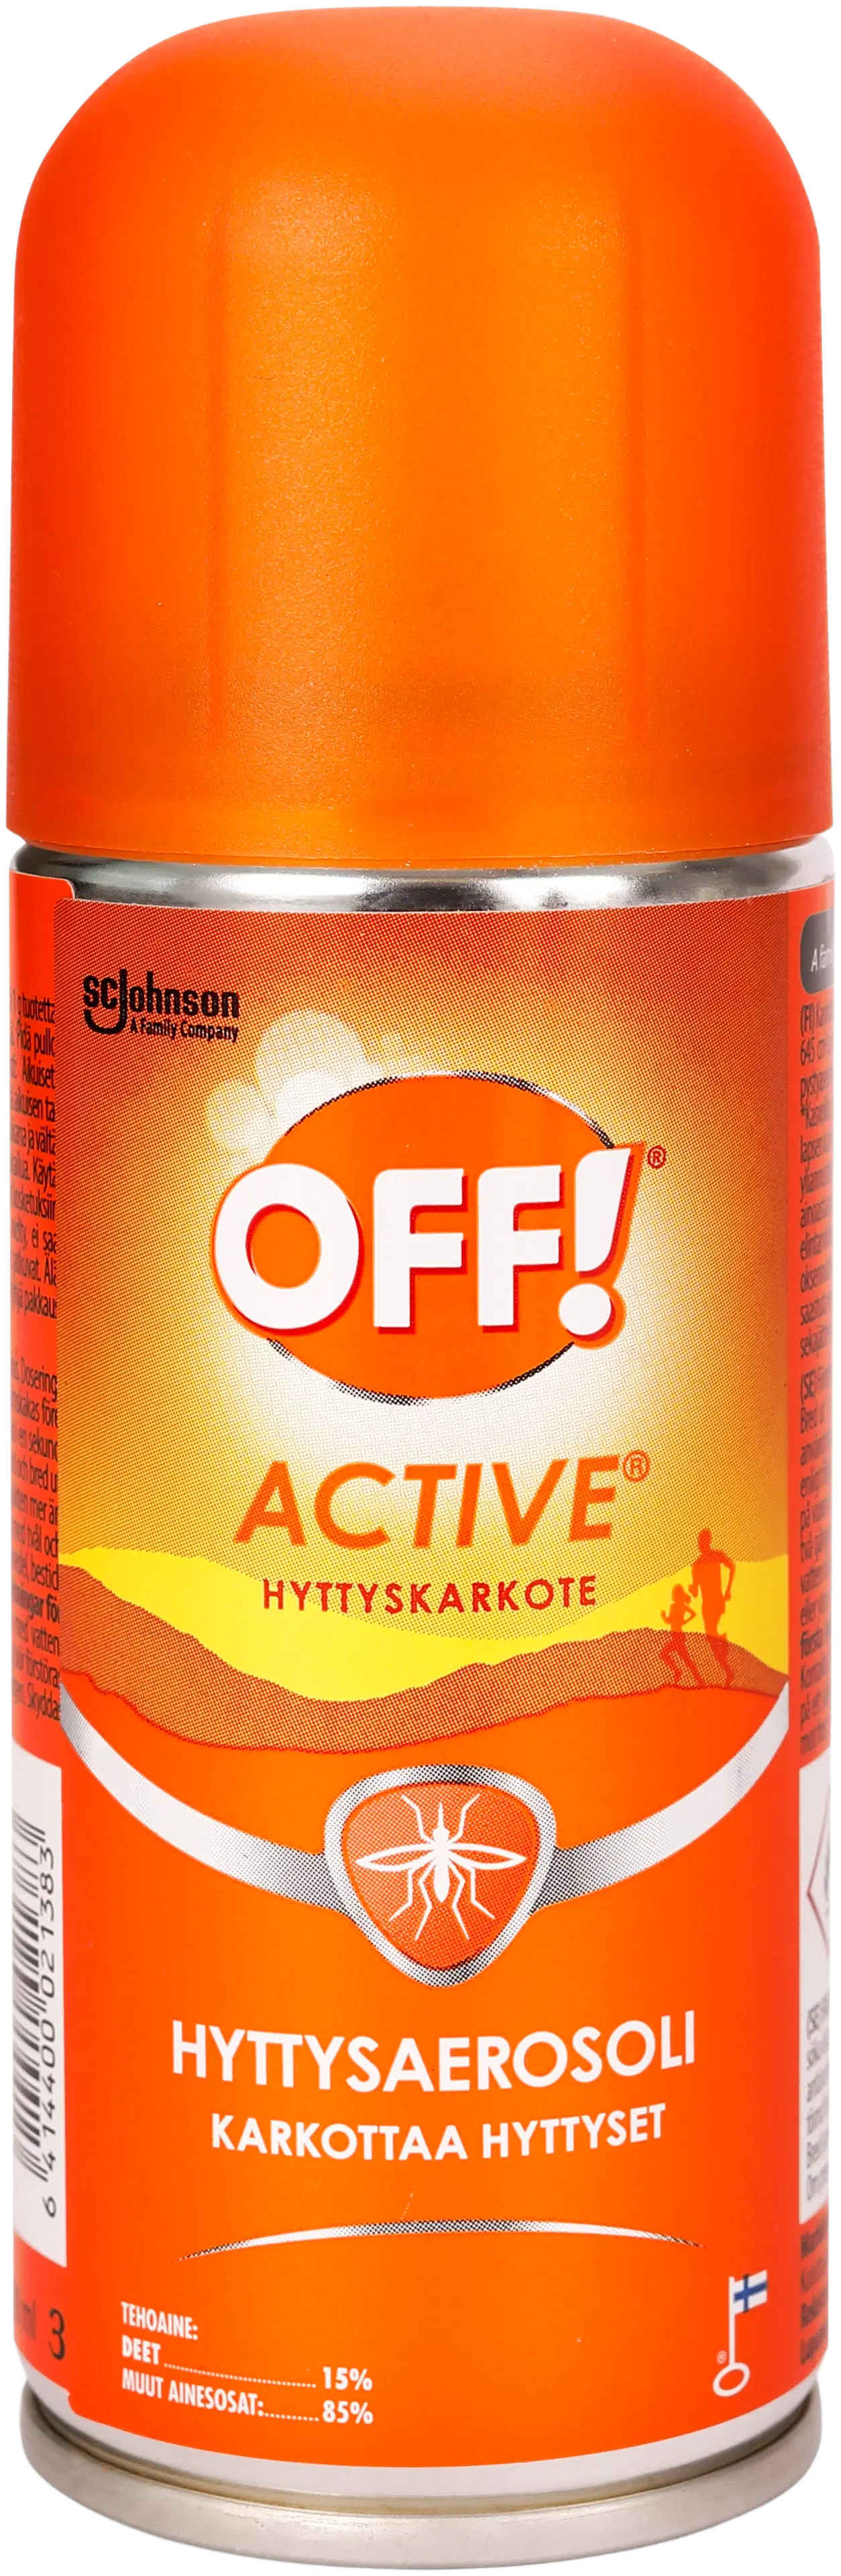 OFF! Active hyttysaerosoli 100ml